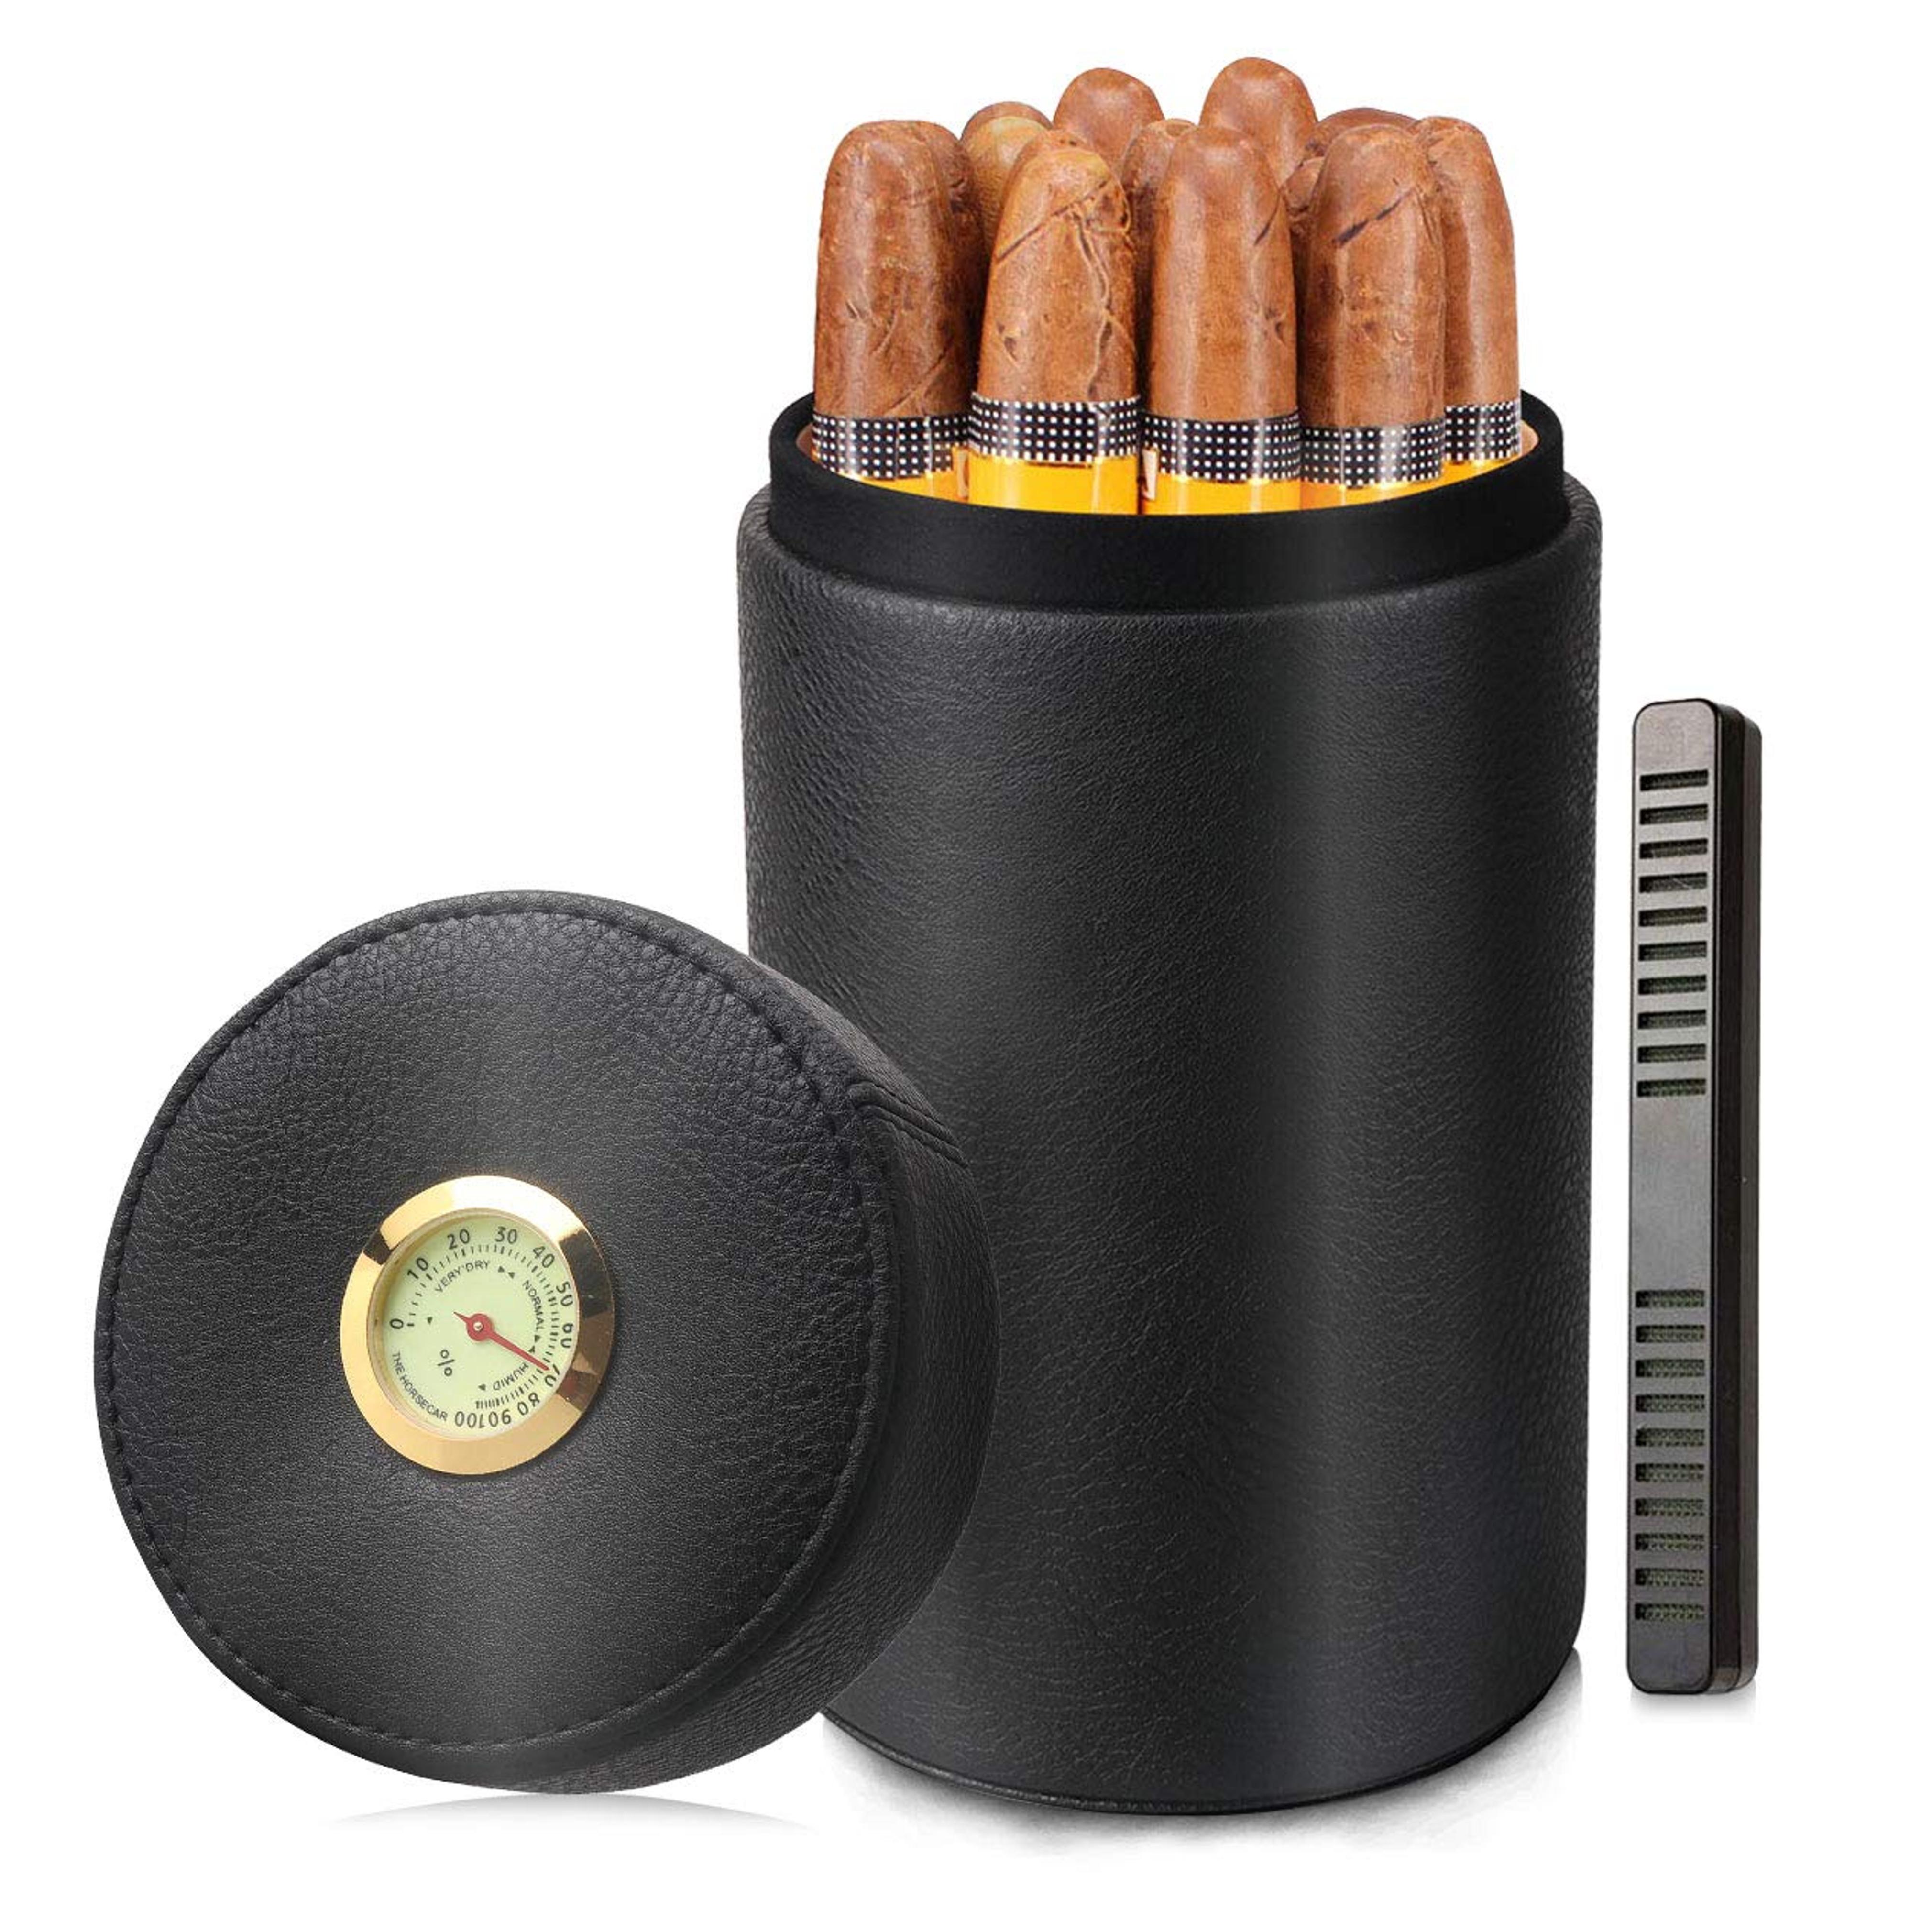 Amazon.com: Scotte Cigar humidor case/jar,Leather Cedar Wood Cigar Canister Portable for 12-16 Cigar (Black) : Health & Household